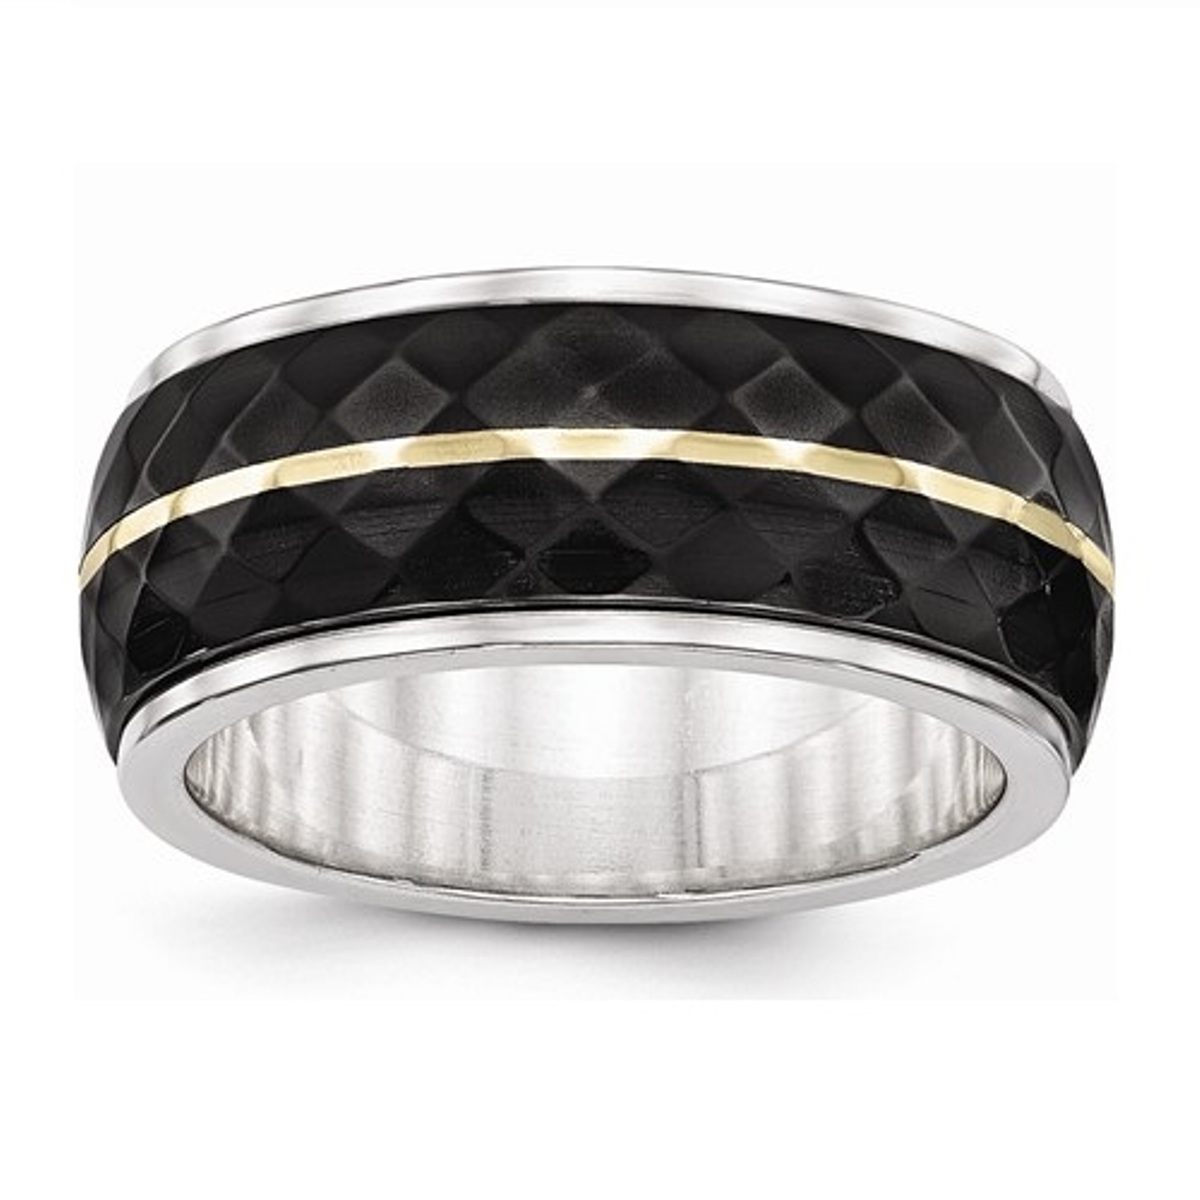  Titanium And Black Ti Inlay With 14k Yellow Stripe Ring